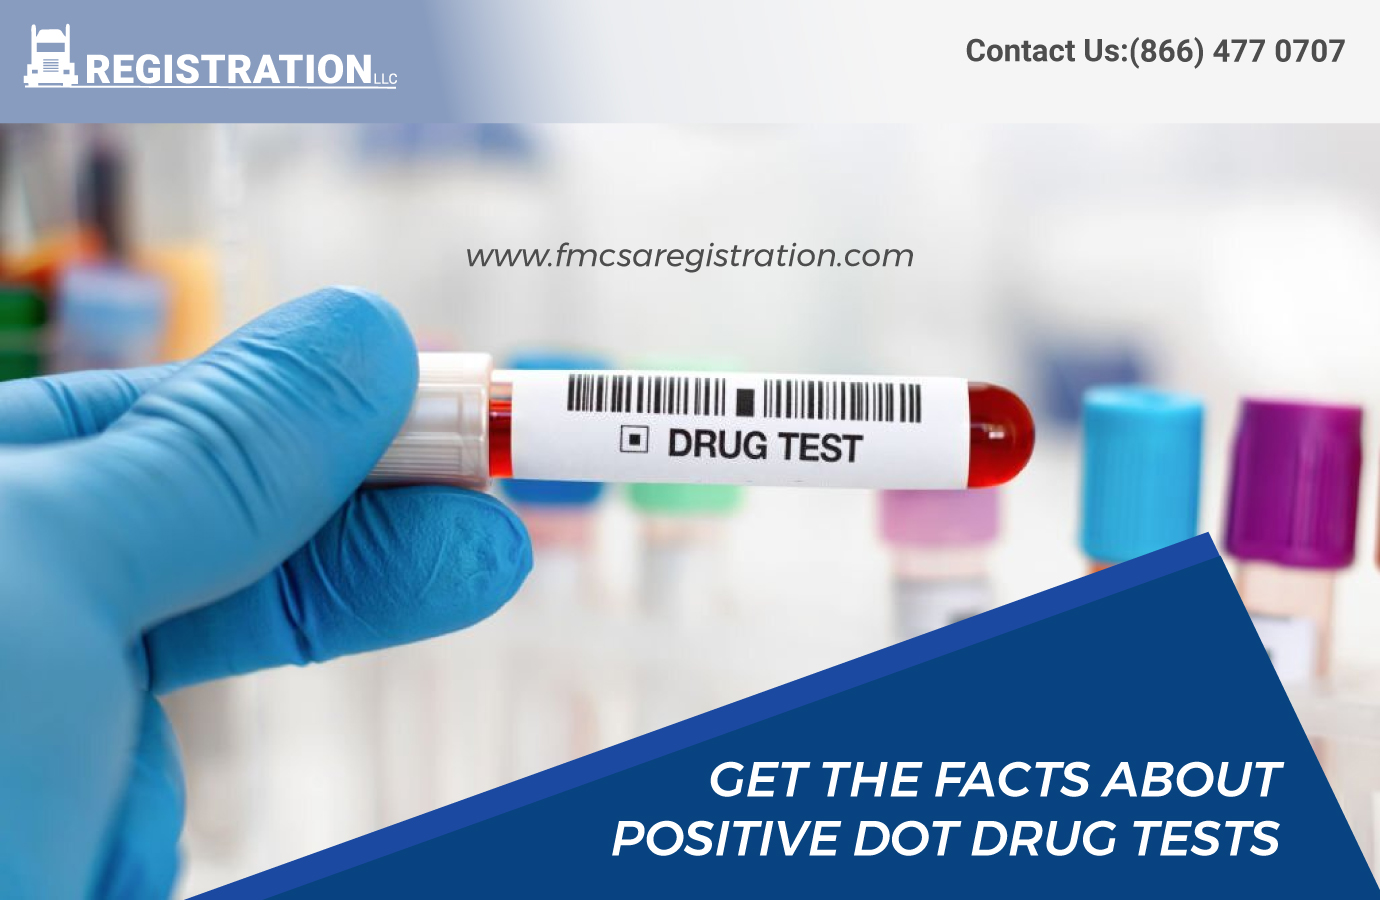 What happens if you test positive on DOT drug test?